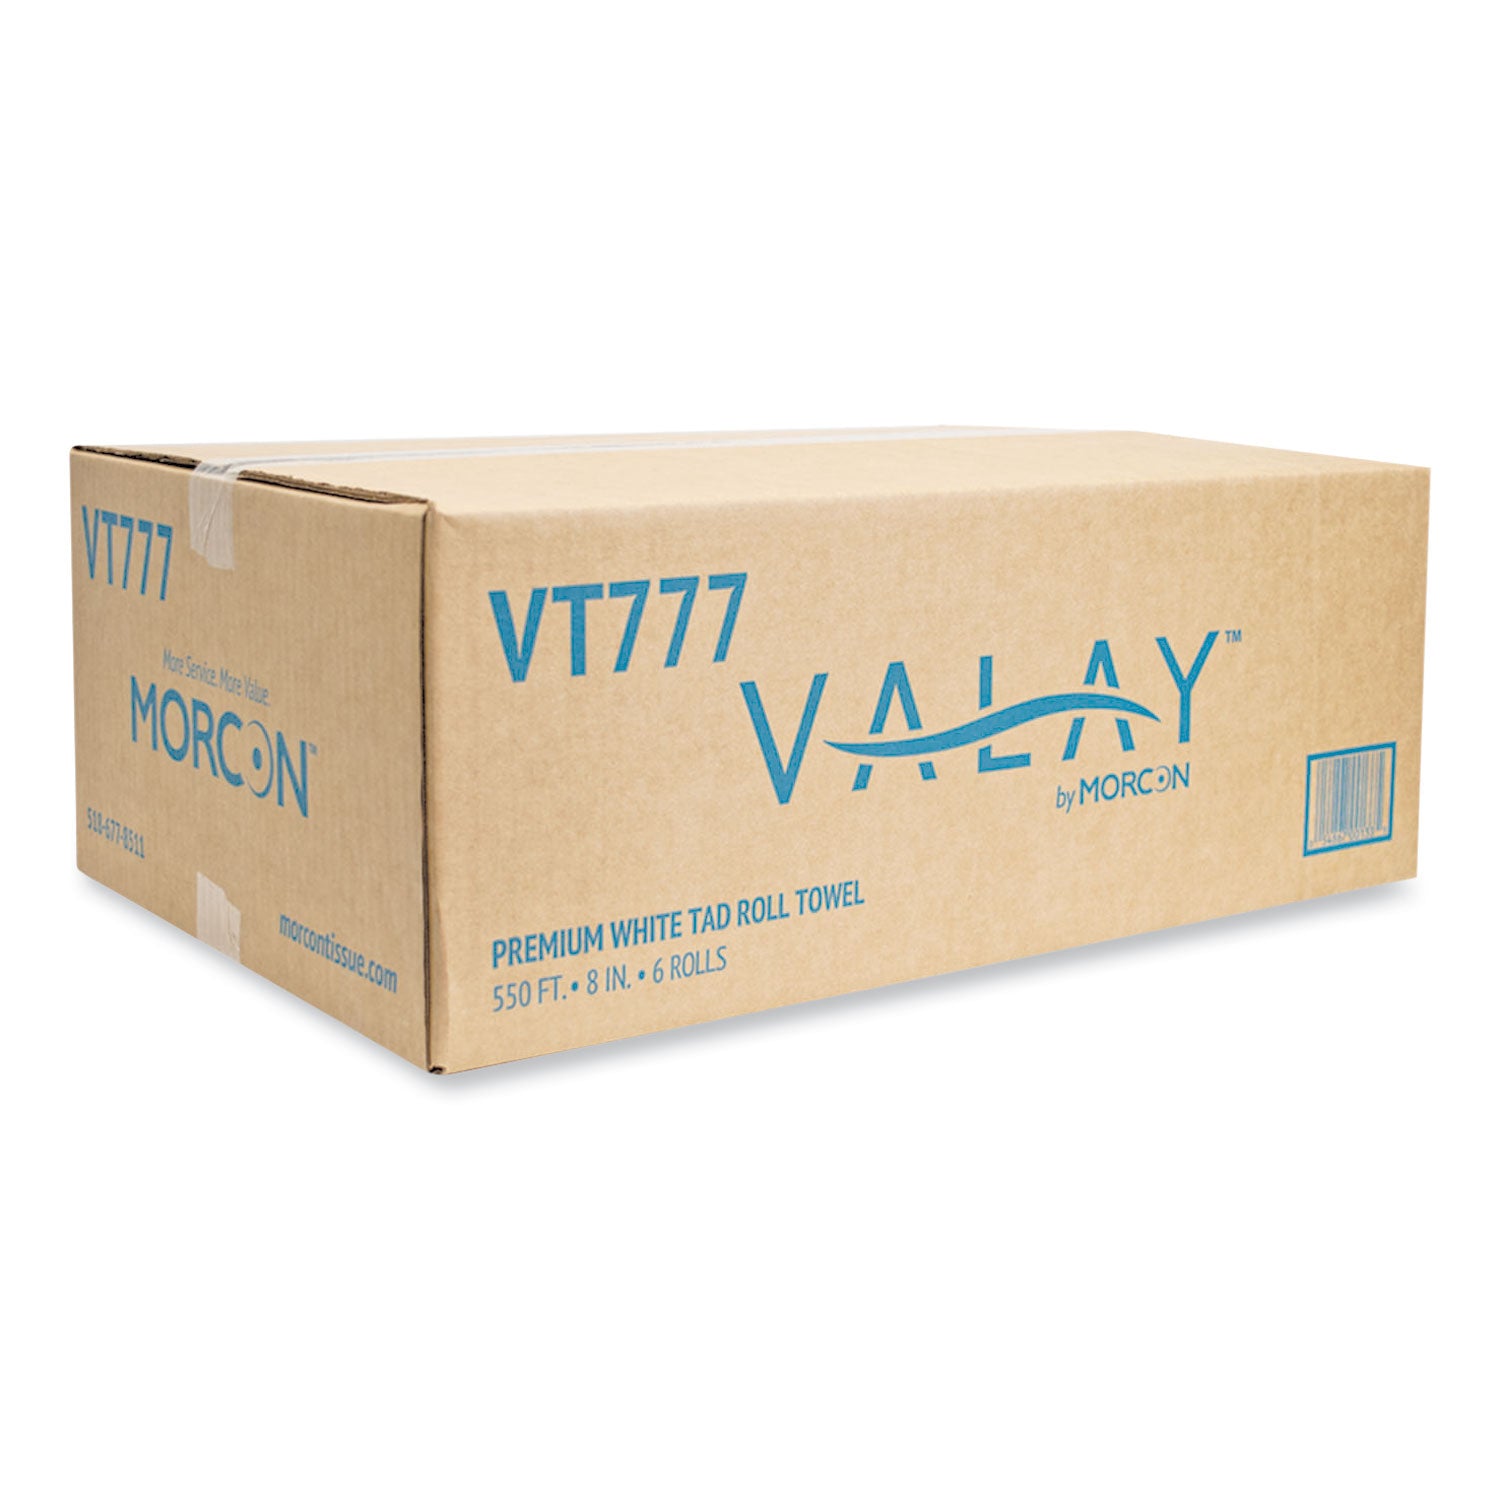 valay-proprietary-tad-roll-towels-1-ply-75-x-550-ft-white-6-rolls-carton_morvt777 - 2